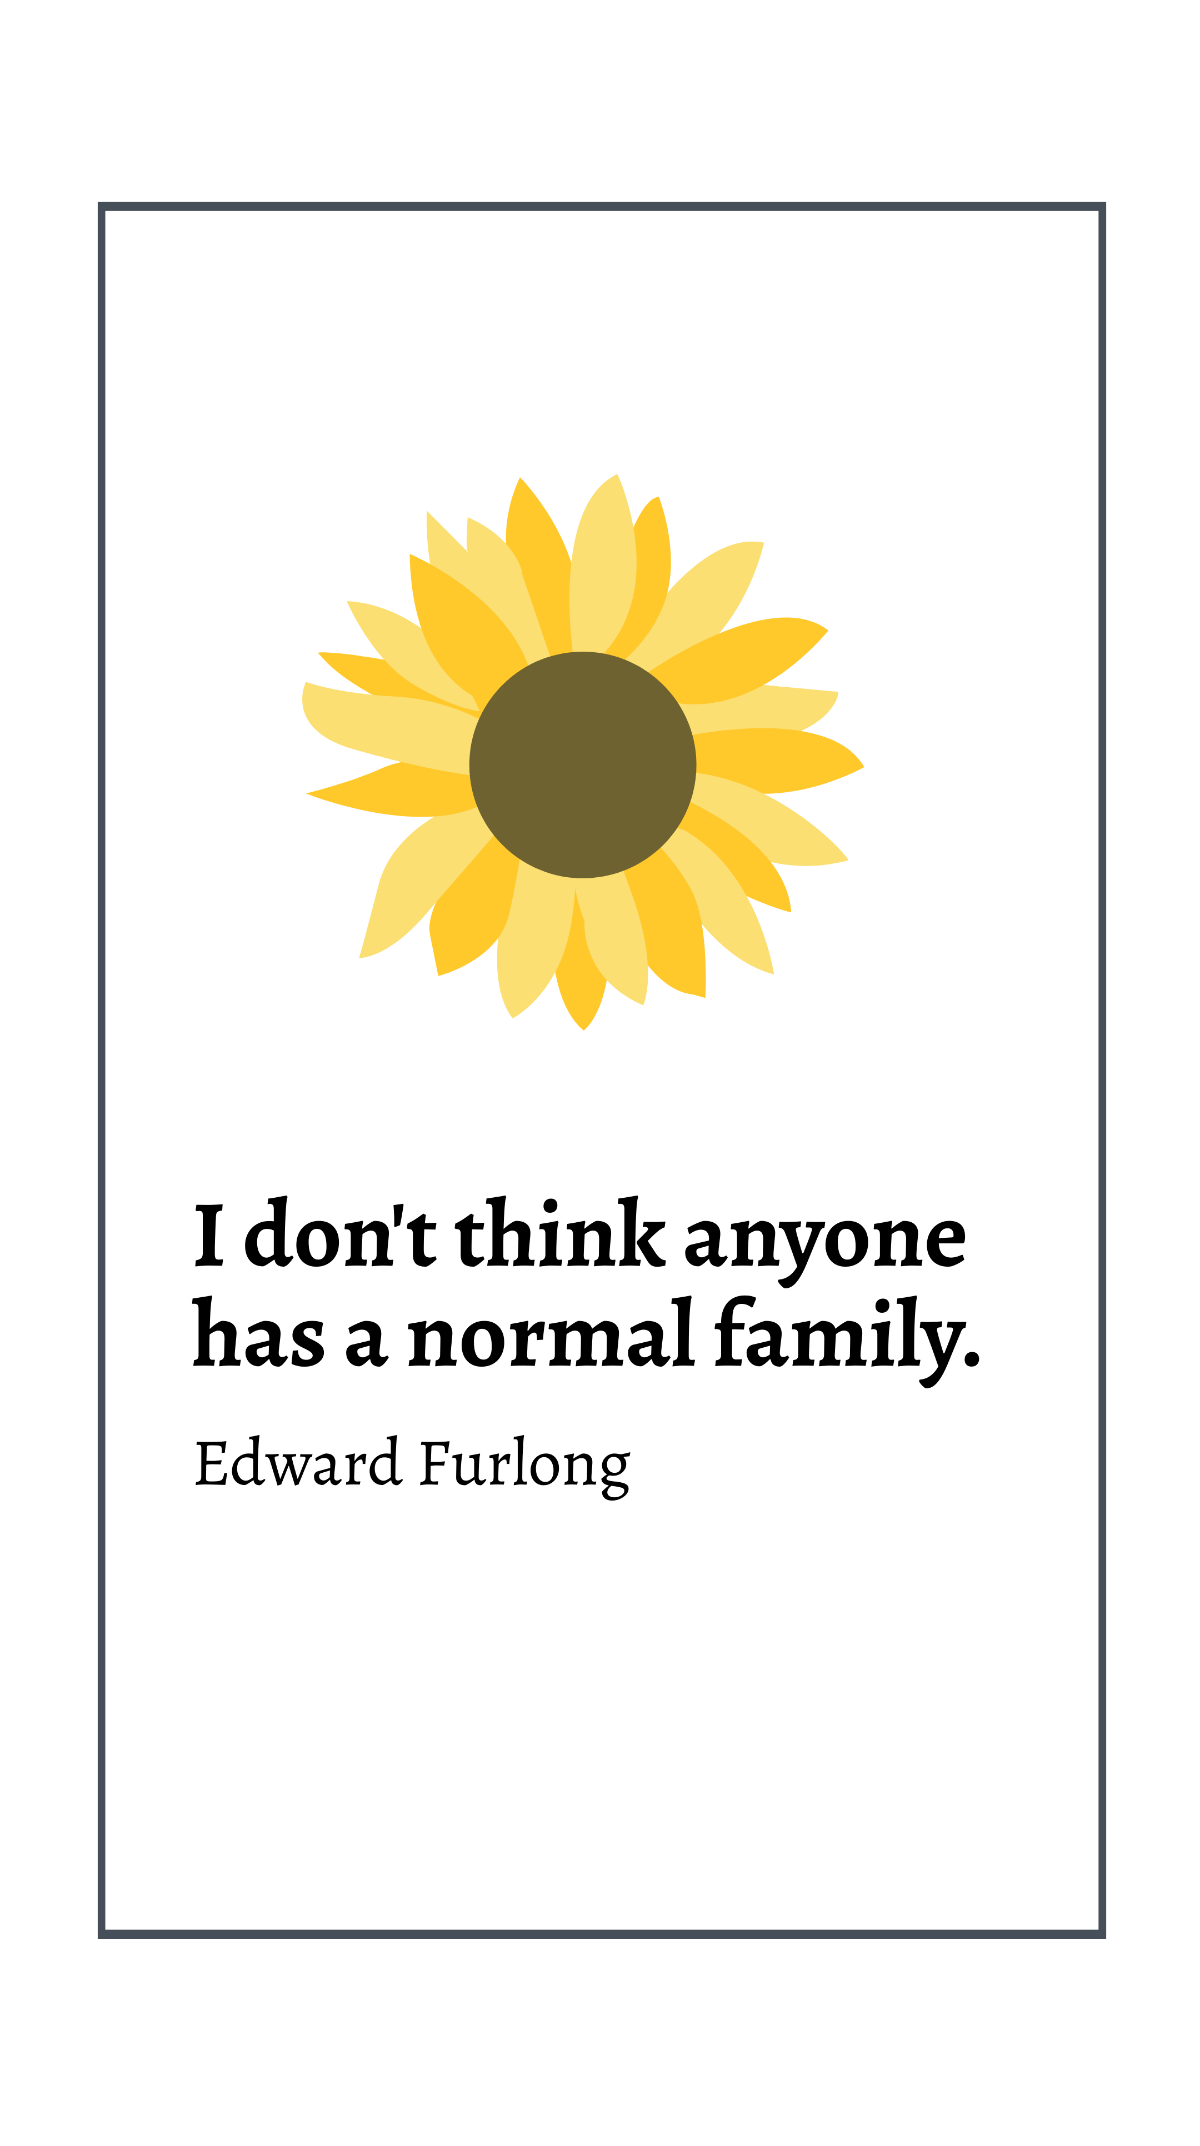 Edward Furlong - I don't think anyone has a normal family.